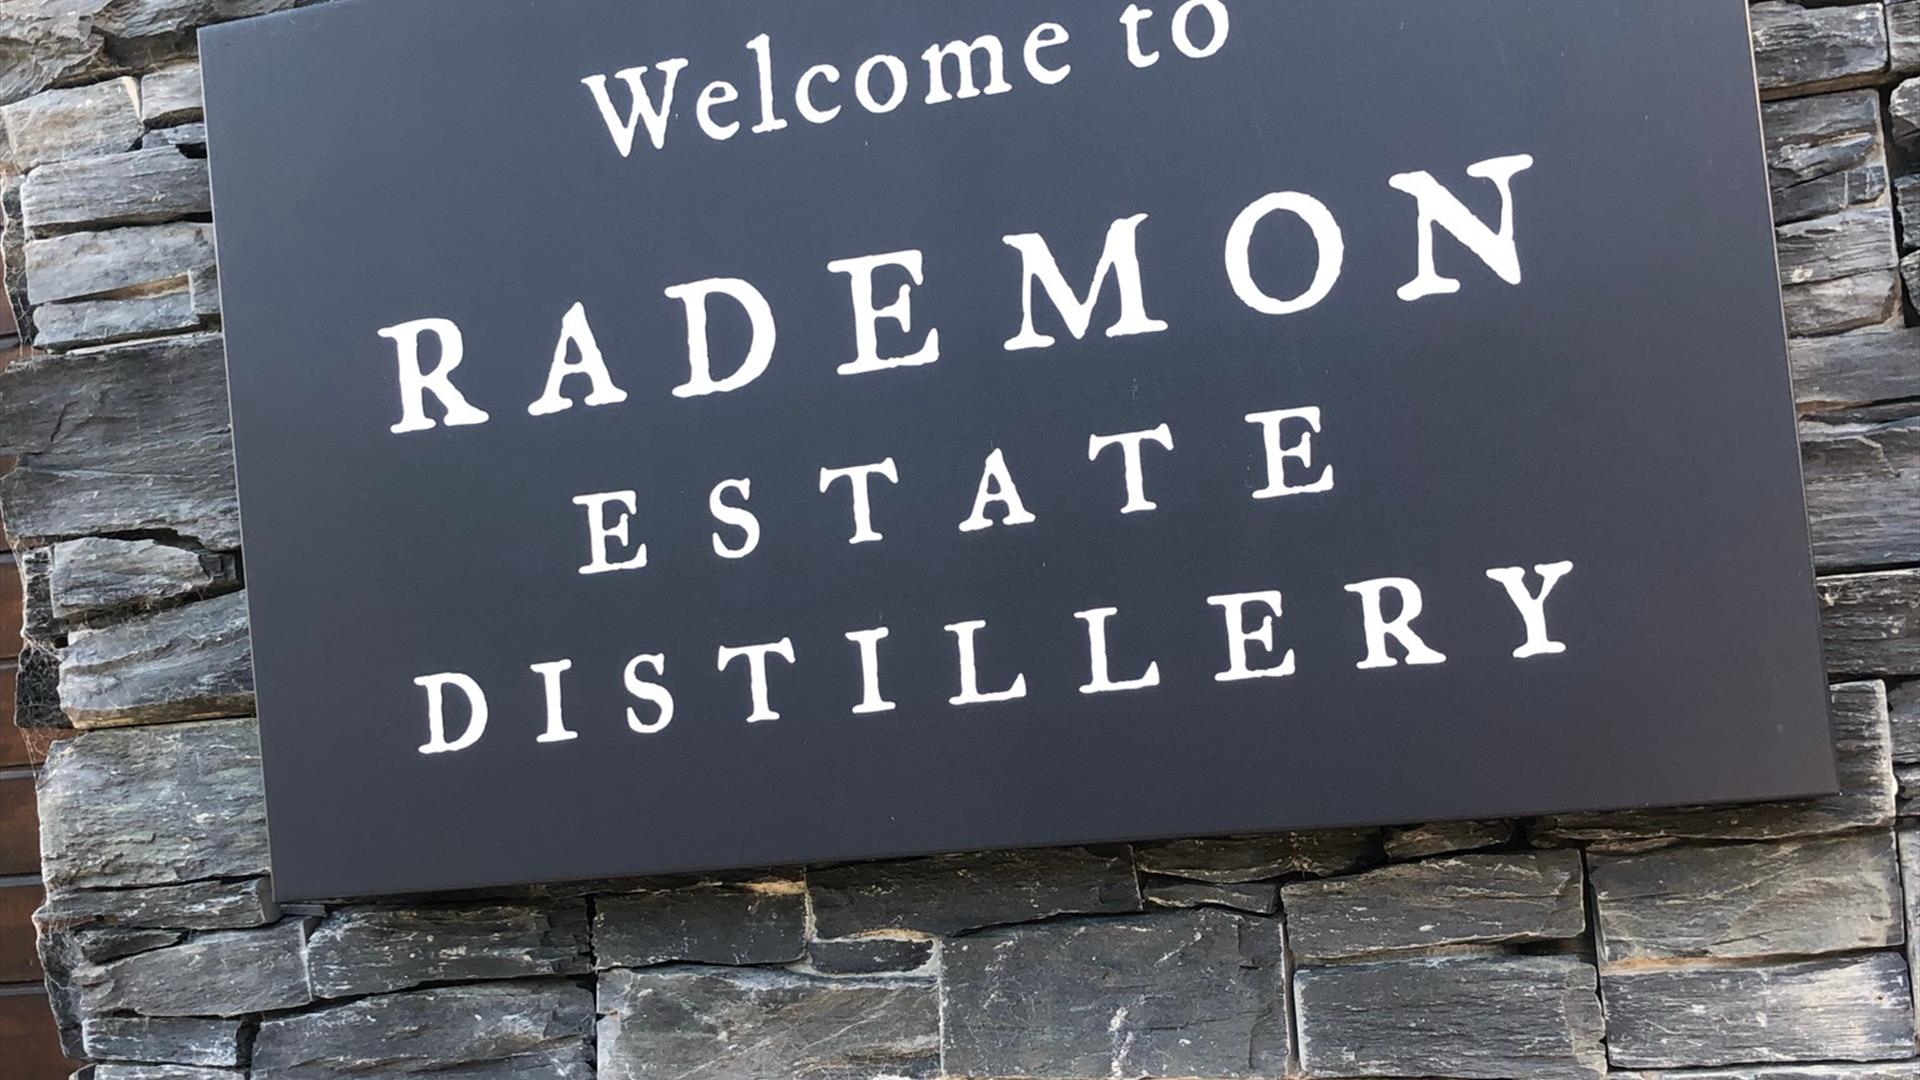 Welcome sign Rademon Estate Distillery